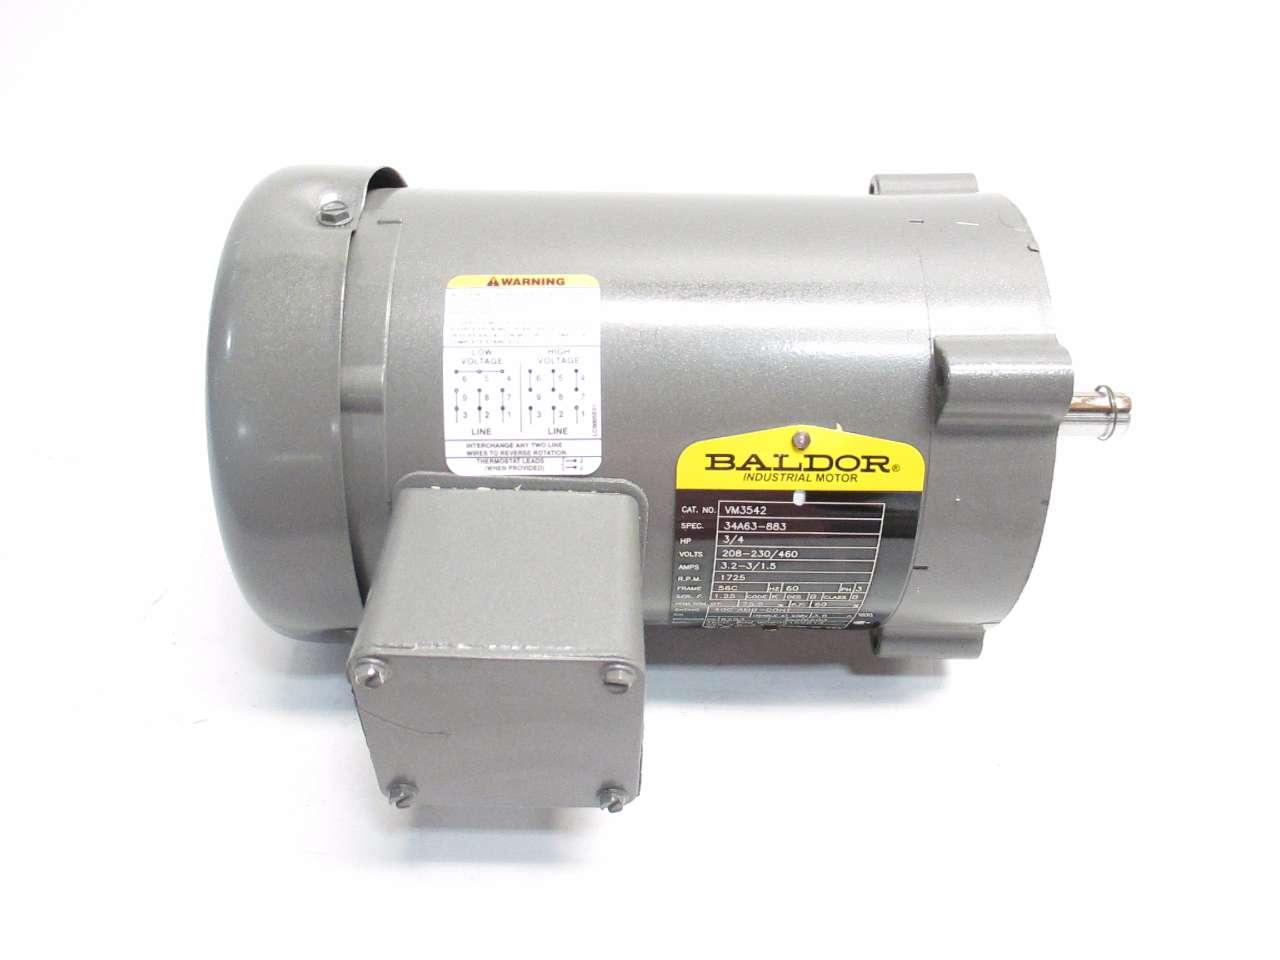 Baldor VM3542 Electric Motor 34A63-883 208-230/460V 3/4HP 1725 RPM 